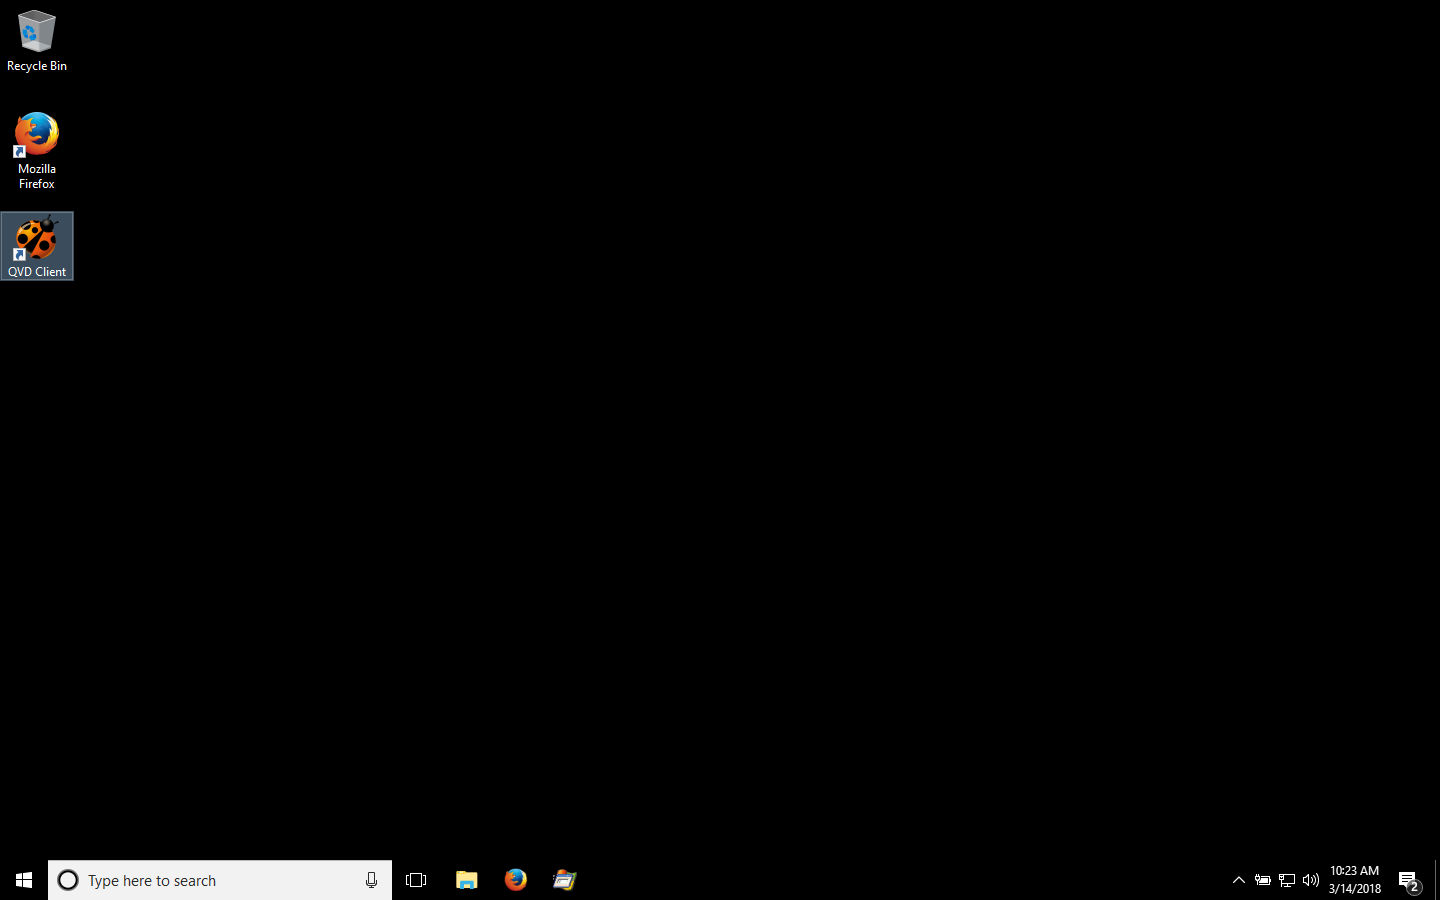 QVD Client Icon in Windows desktop